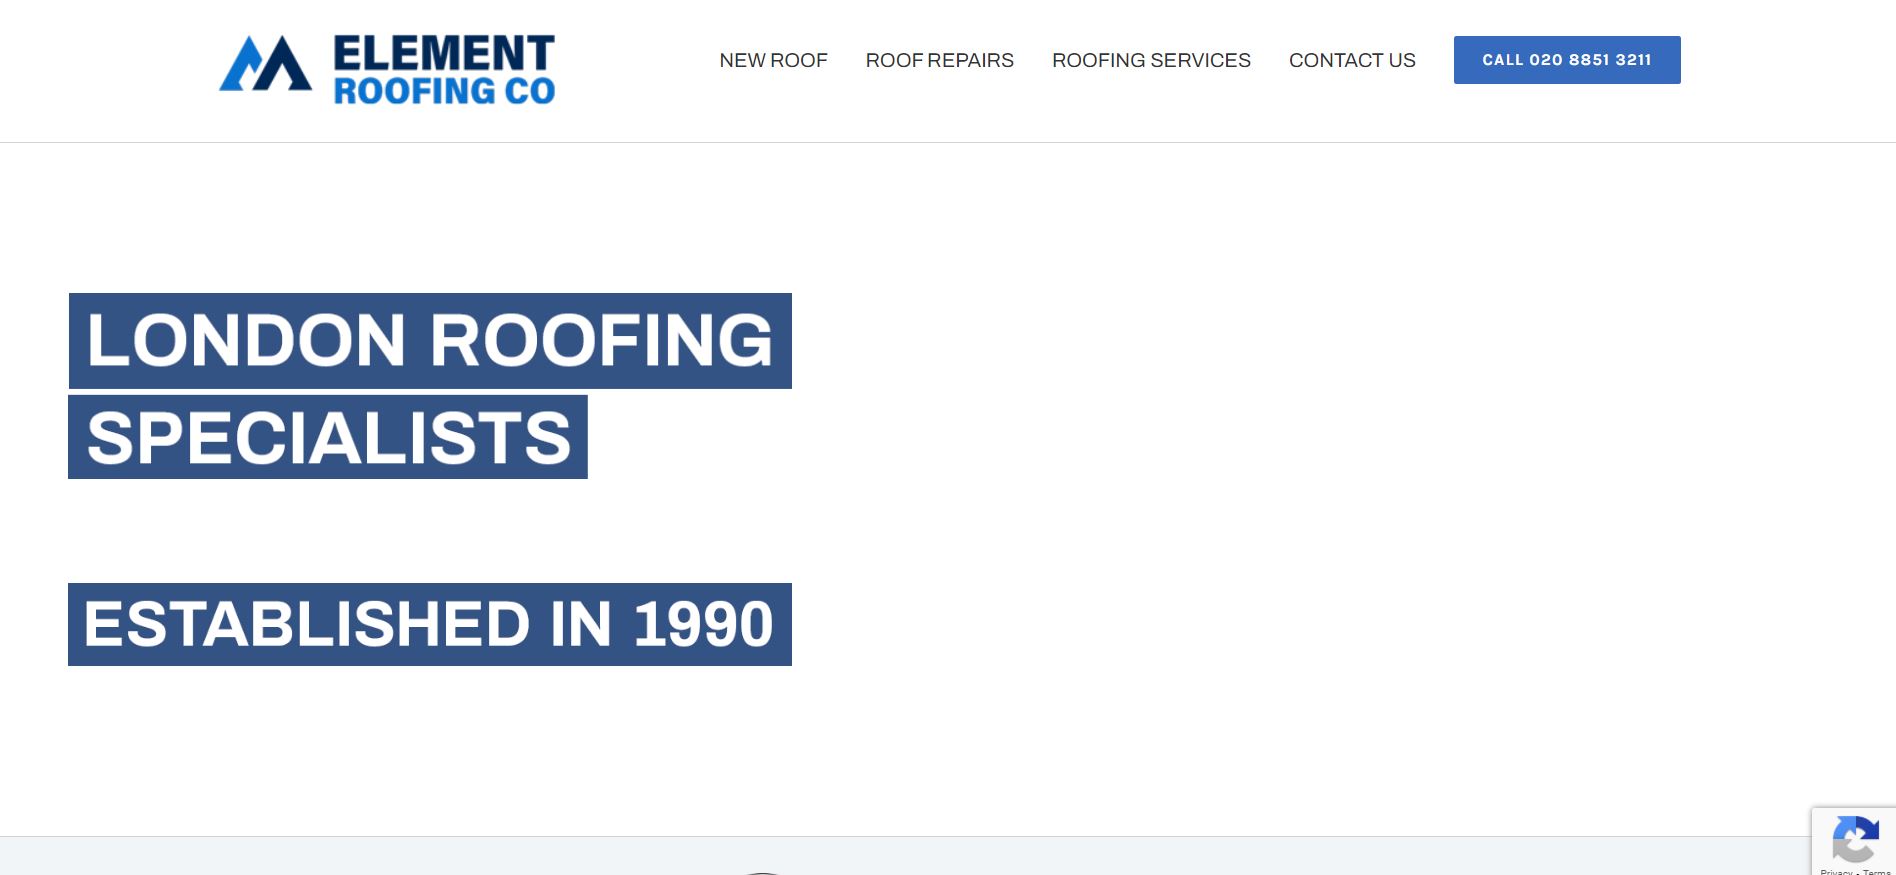 Elemet Roofing Co